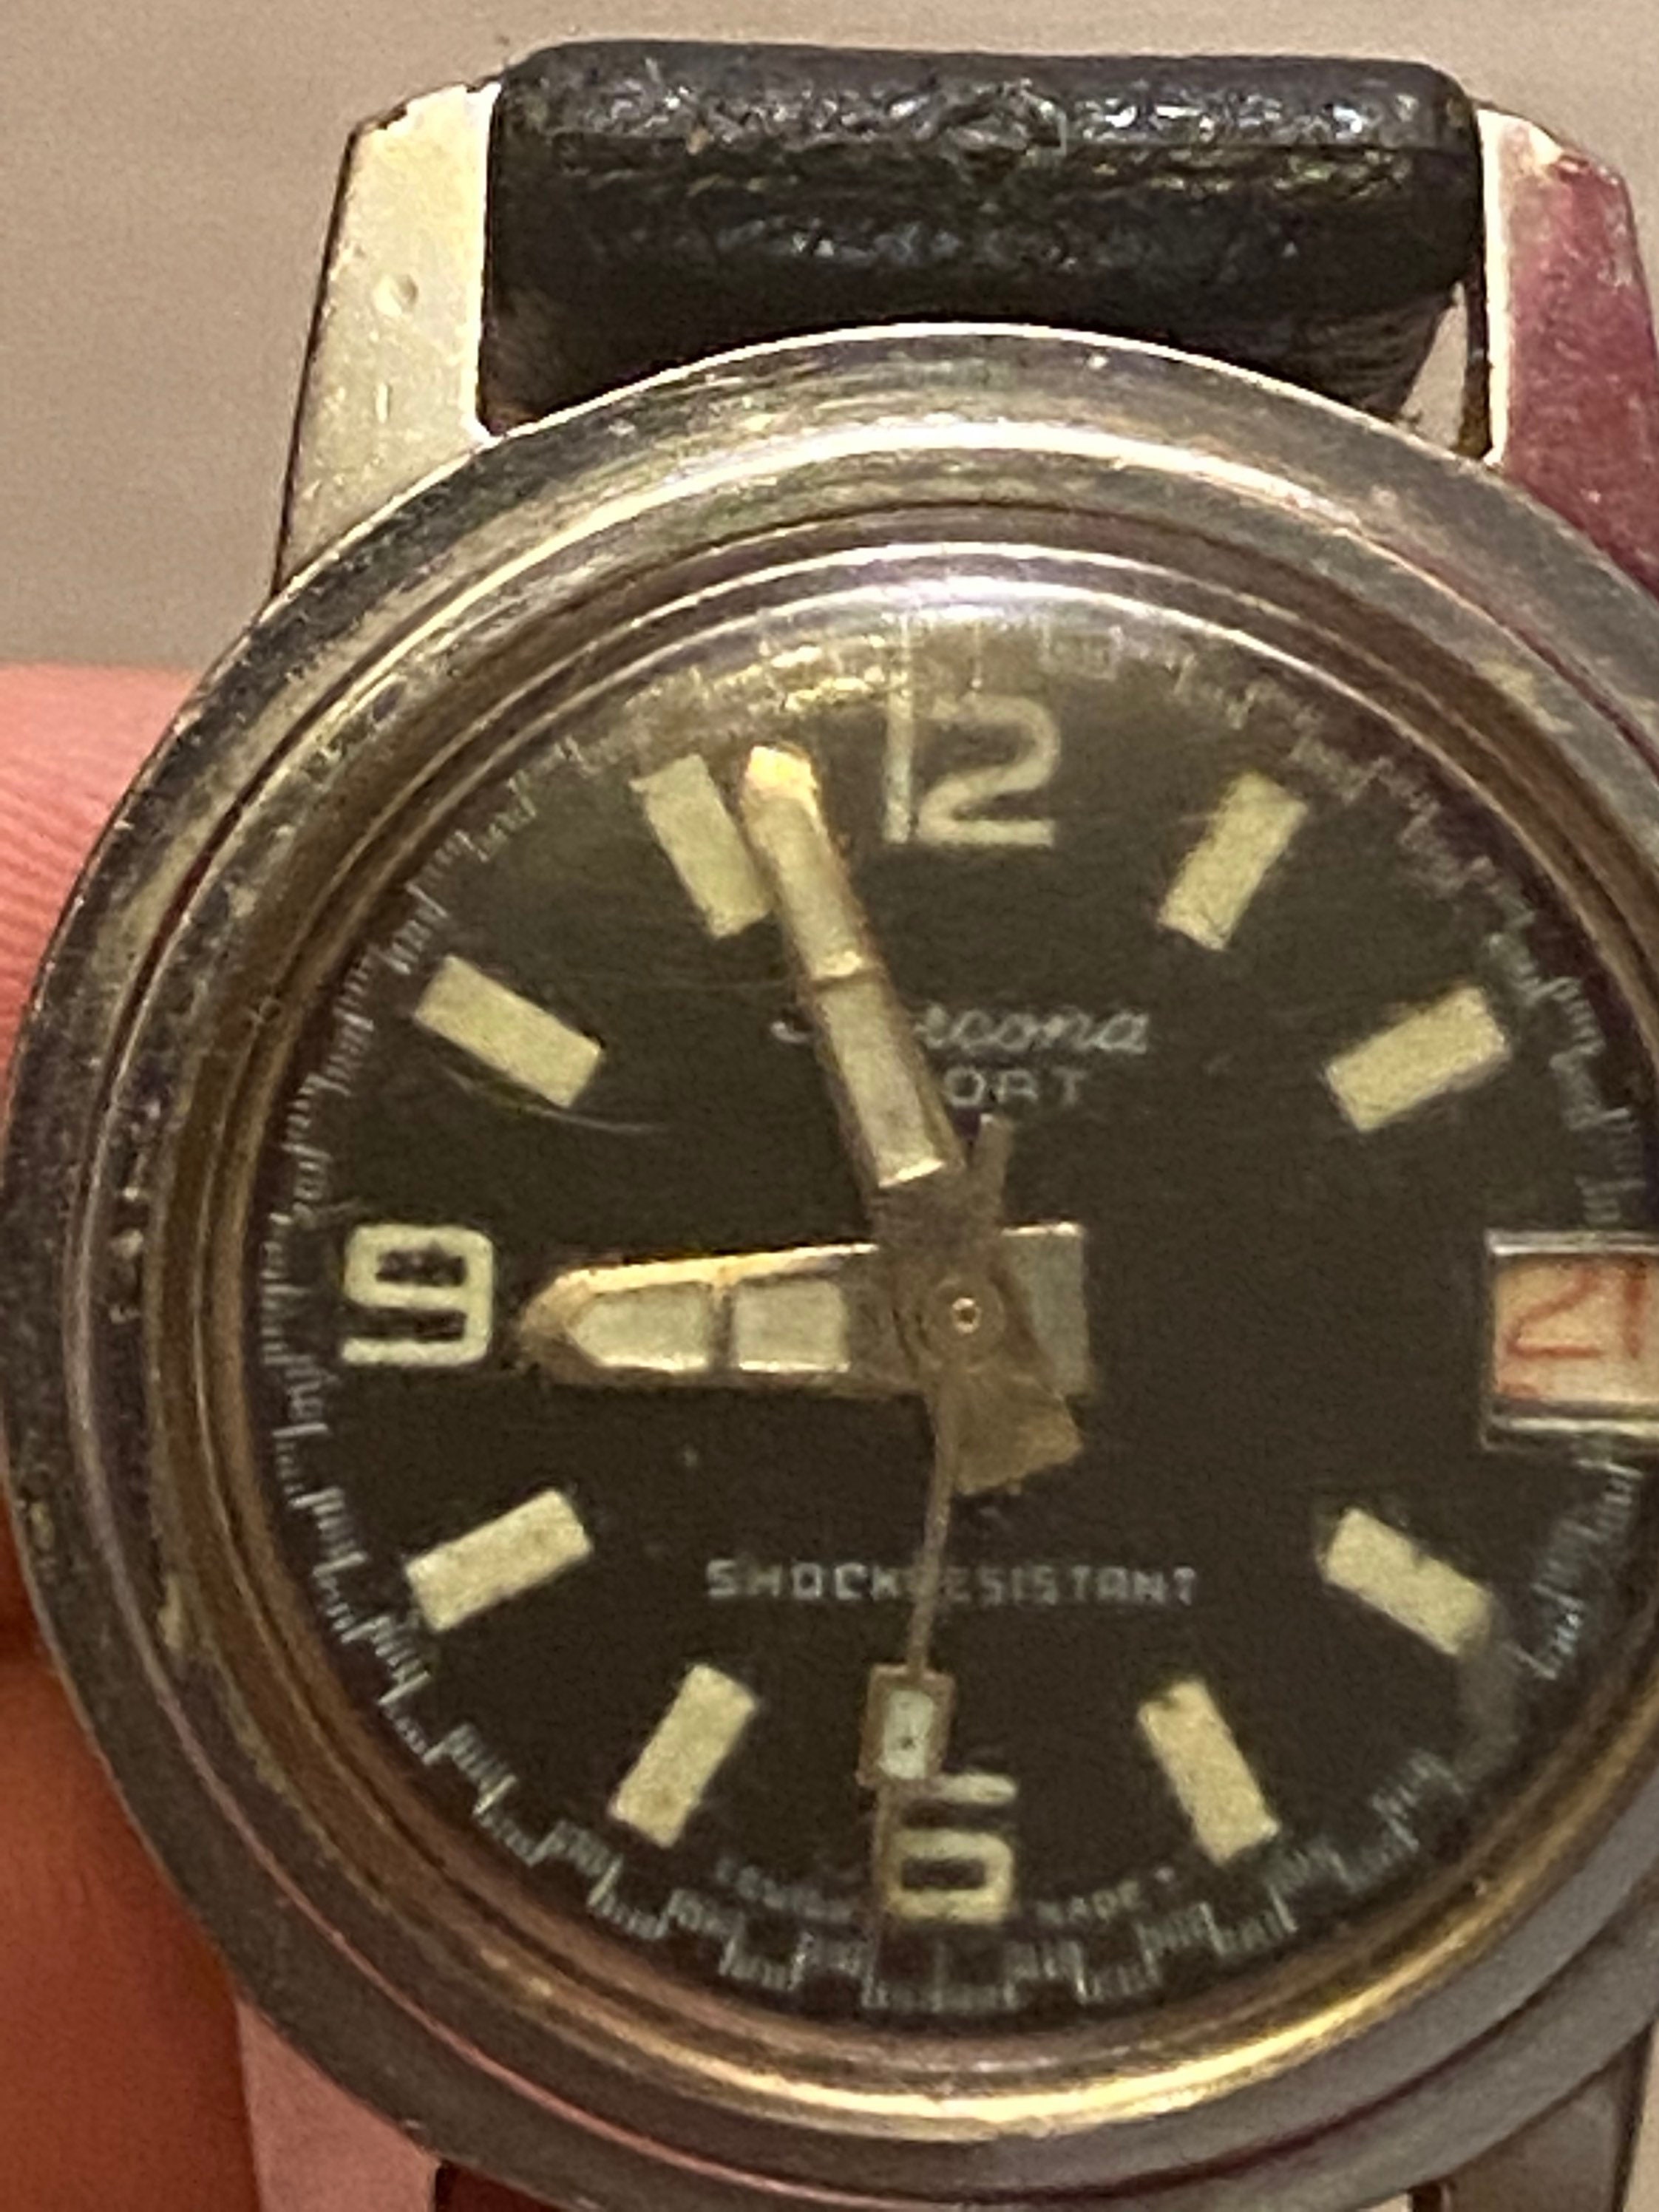 Vintage Bercona Sport Wrist Watch Shock Resistant Swiss - Etsy 日本